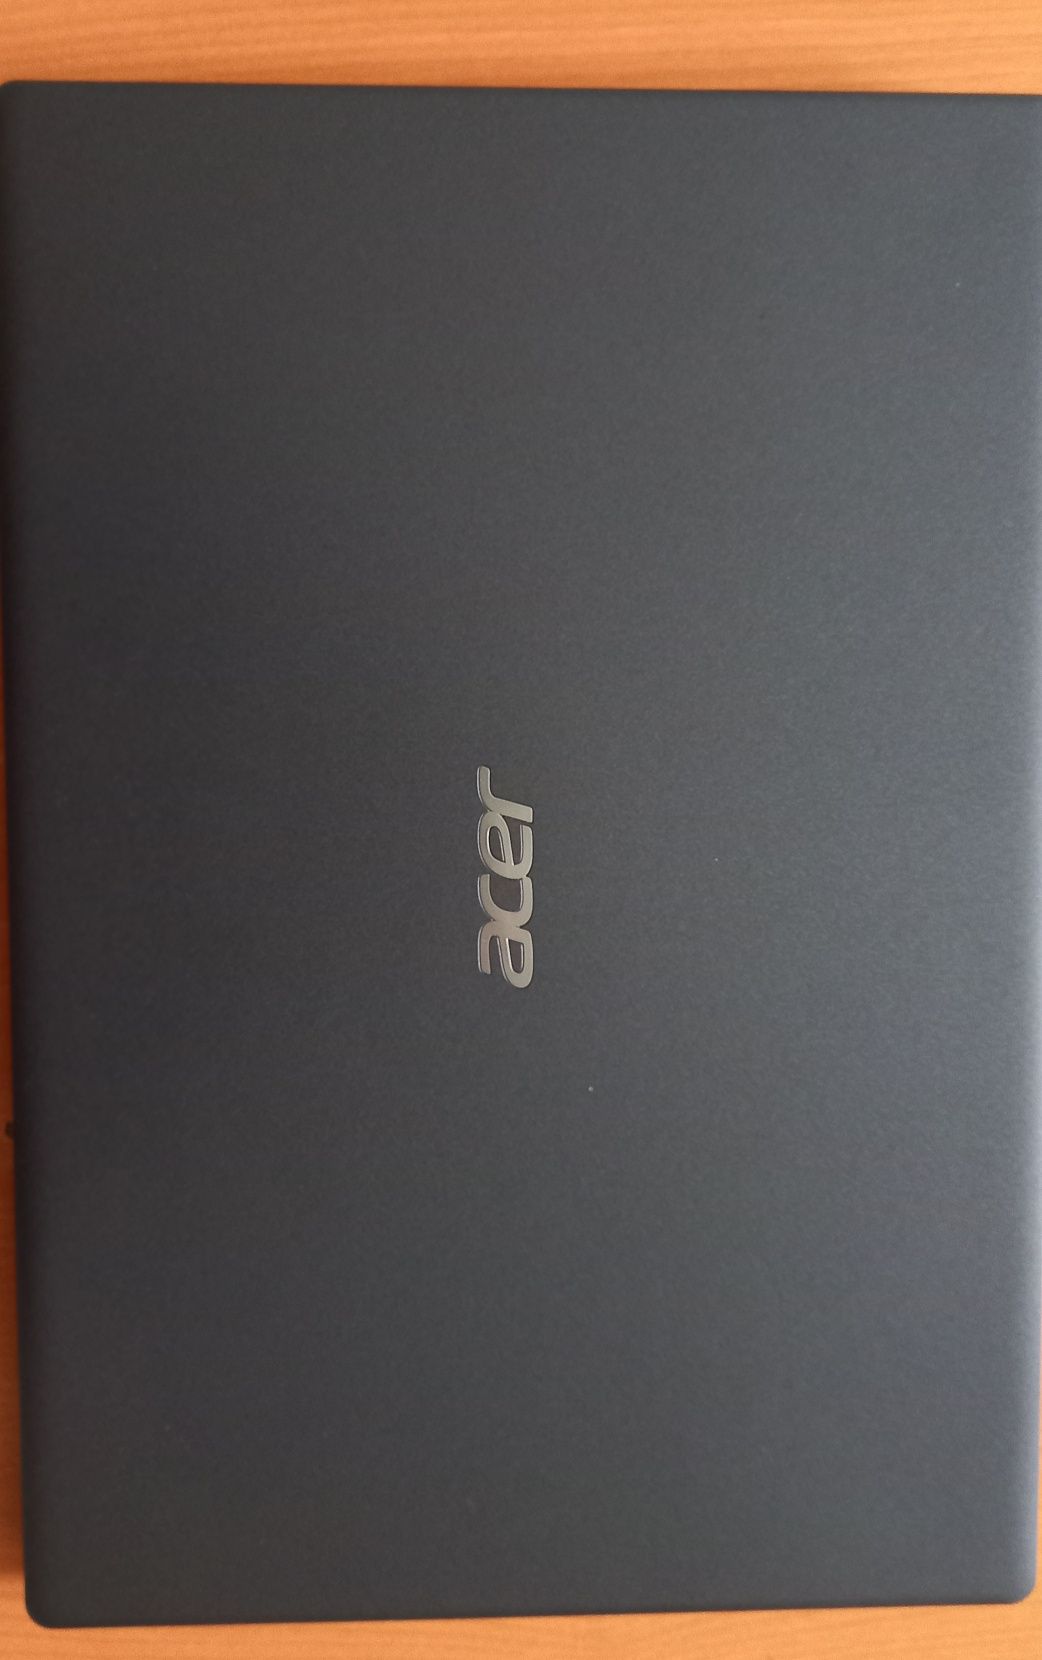 Acer kompiyuter core i5